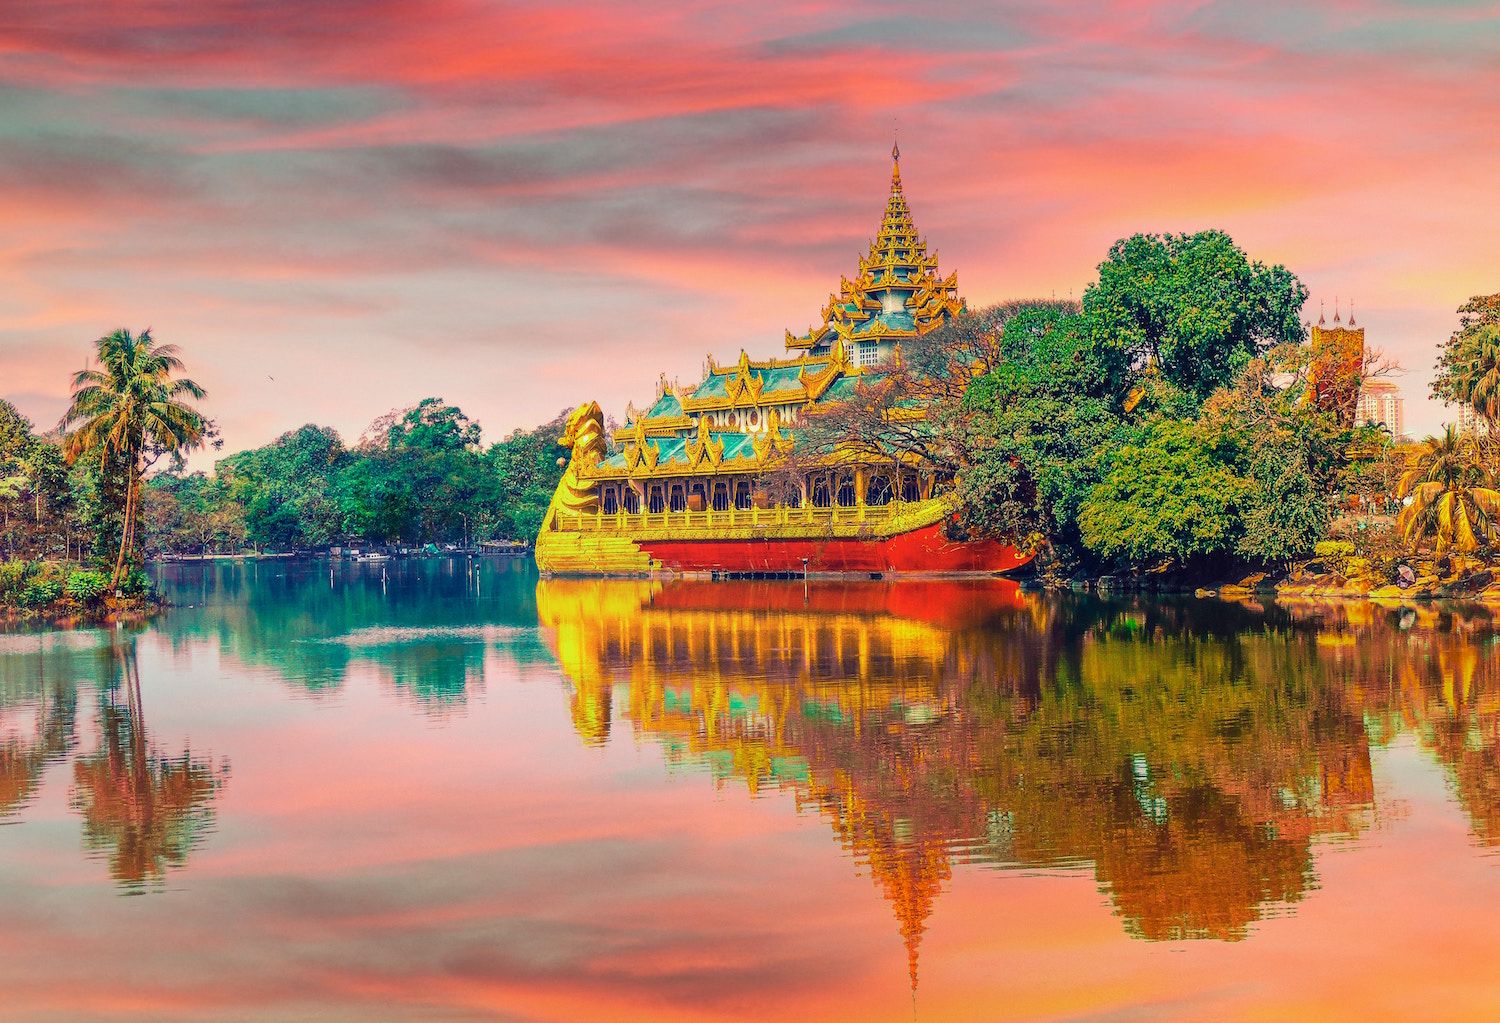 Check out: Yangon, the awe-inspiring cultural capital of Myanmar